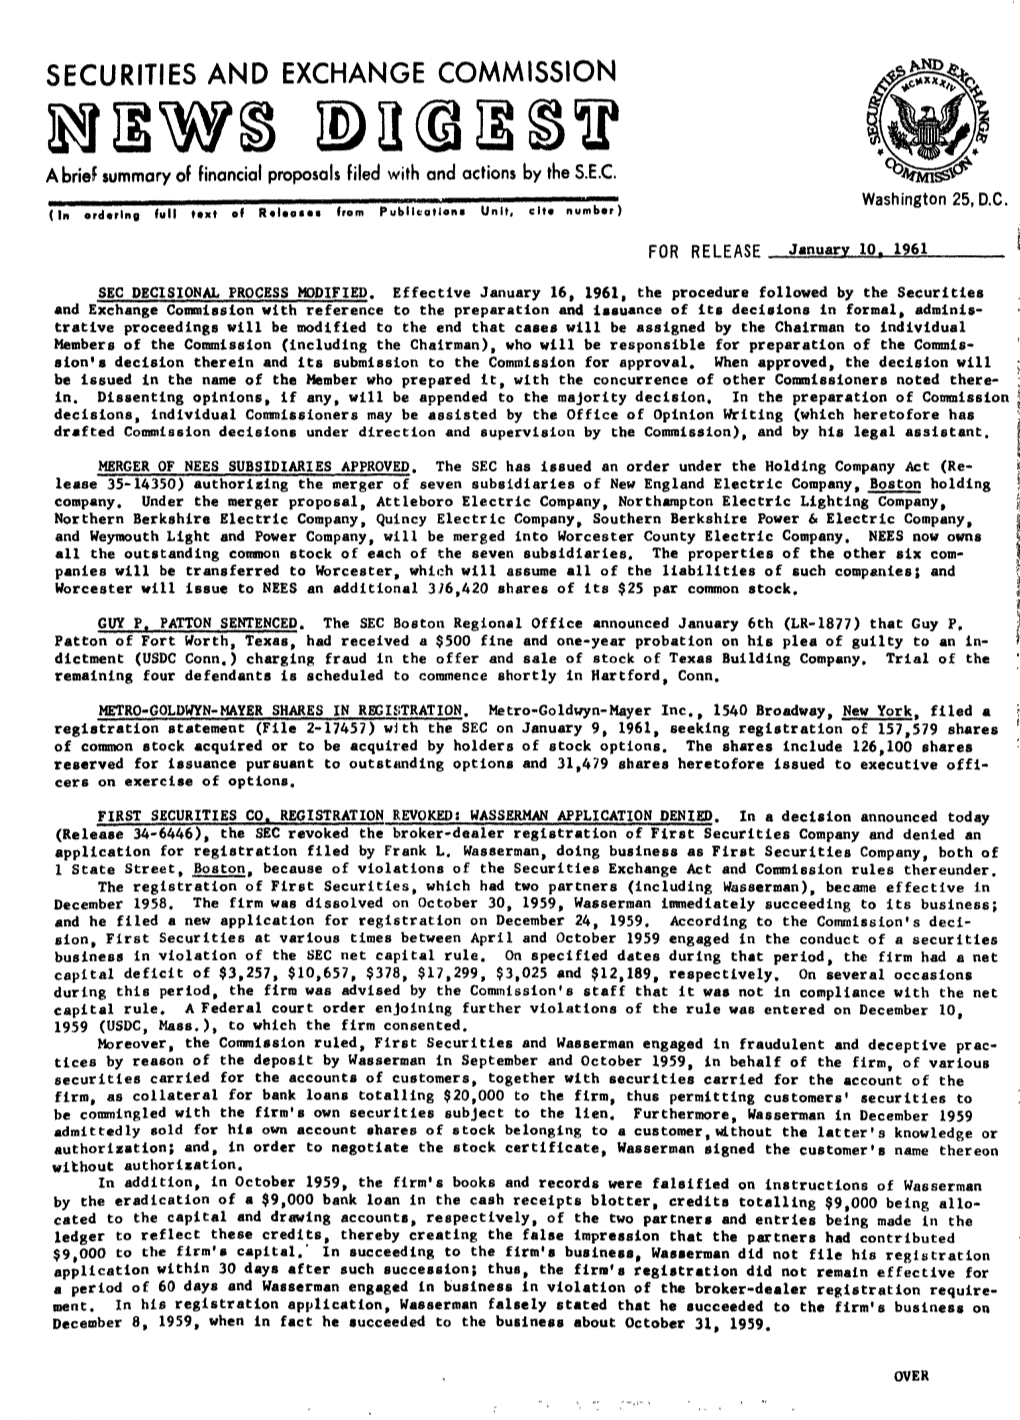 SEC News Digest, 01-10-1961